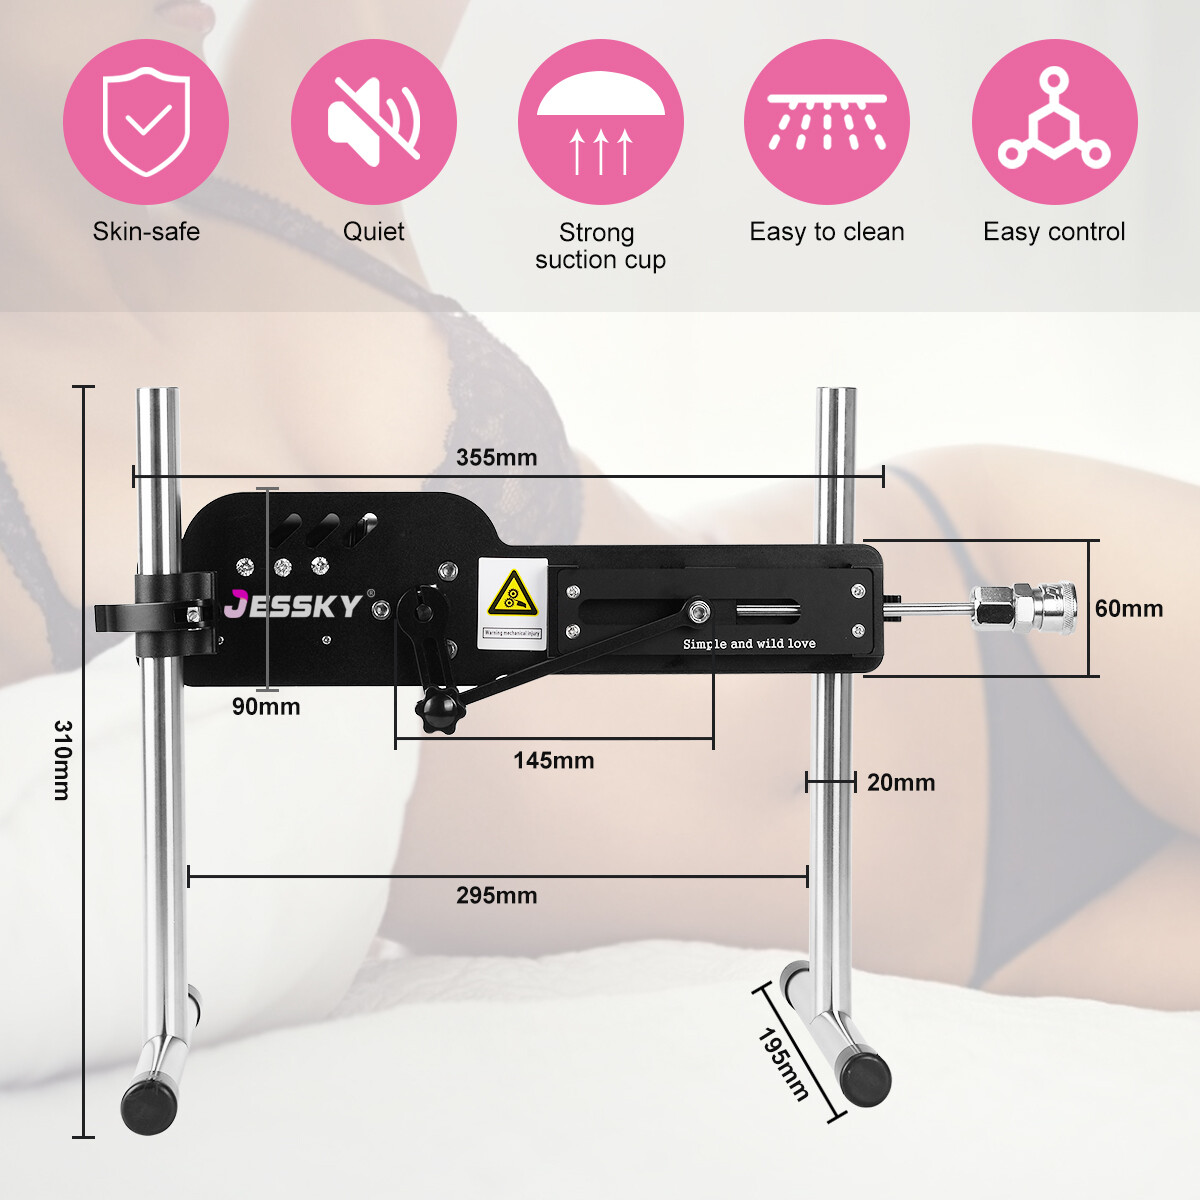 JESSKY Premium Sex Machine with 3 Attachments for Women